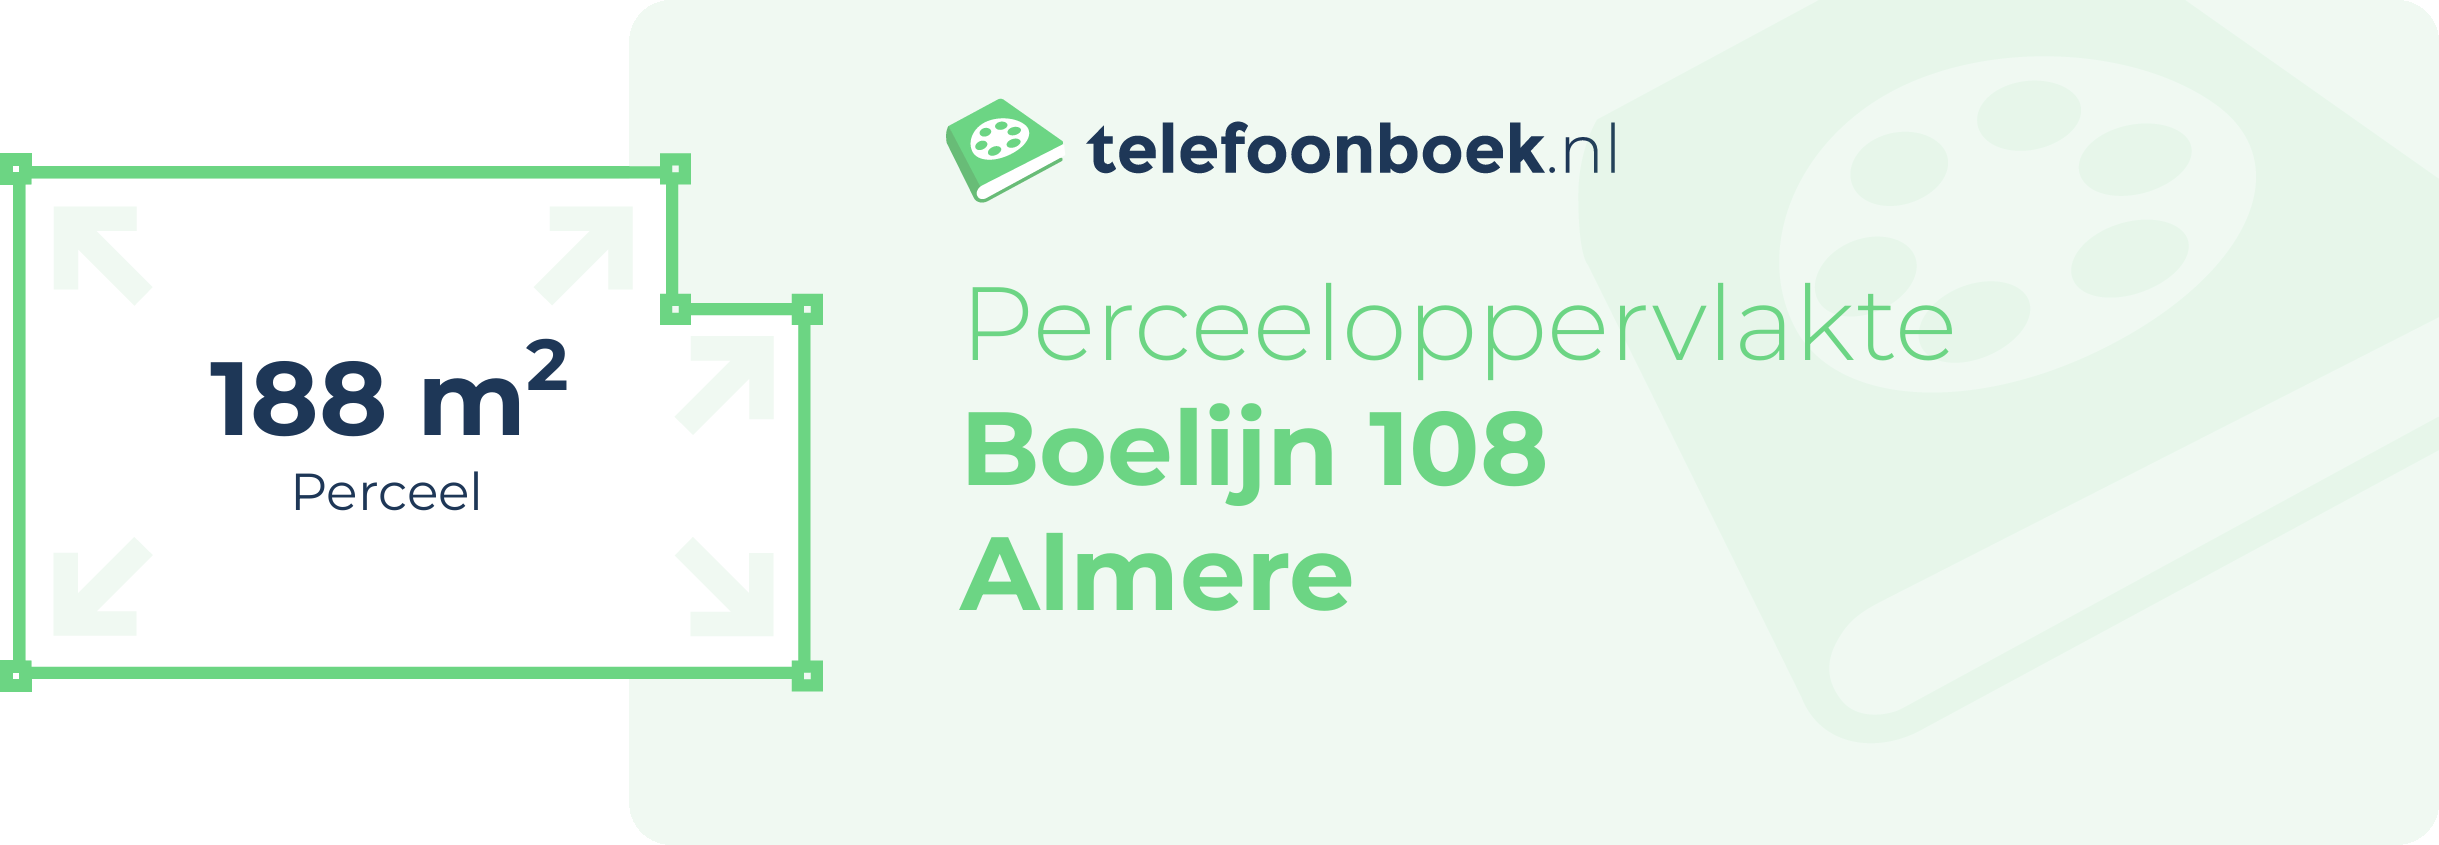 Perceeloppervlakte Boelijn 108 Almere